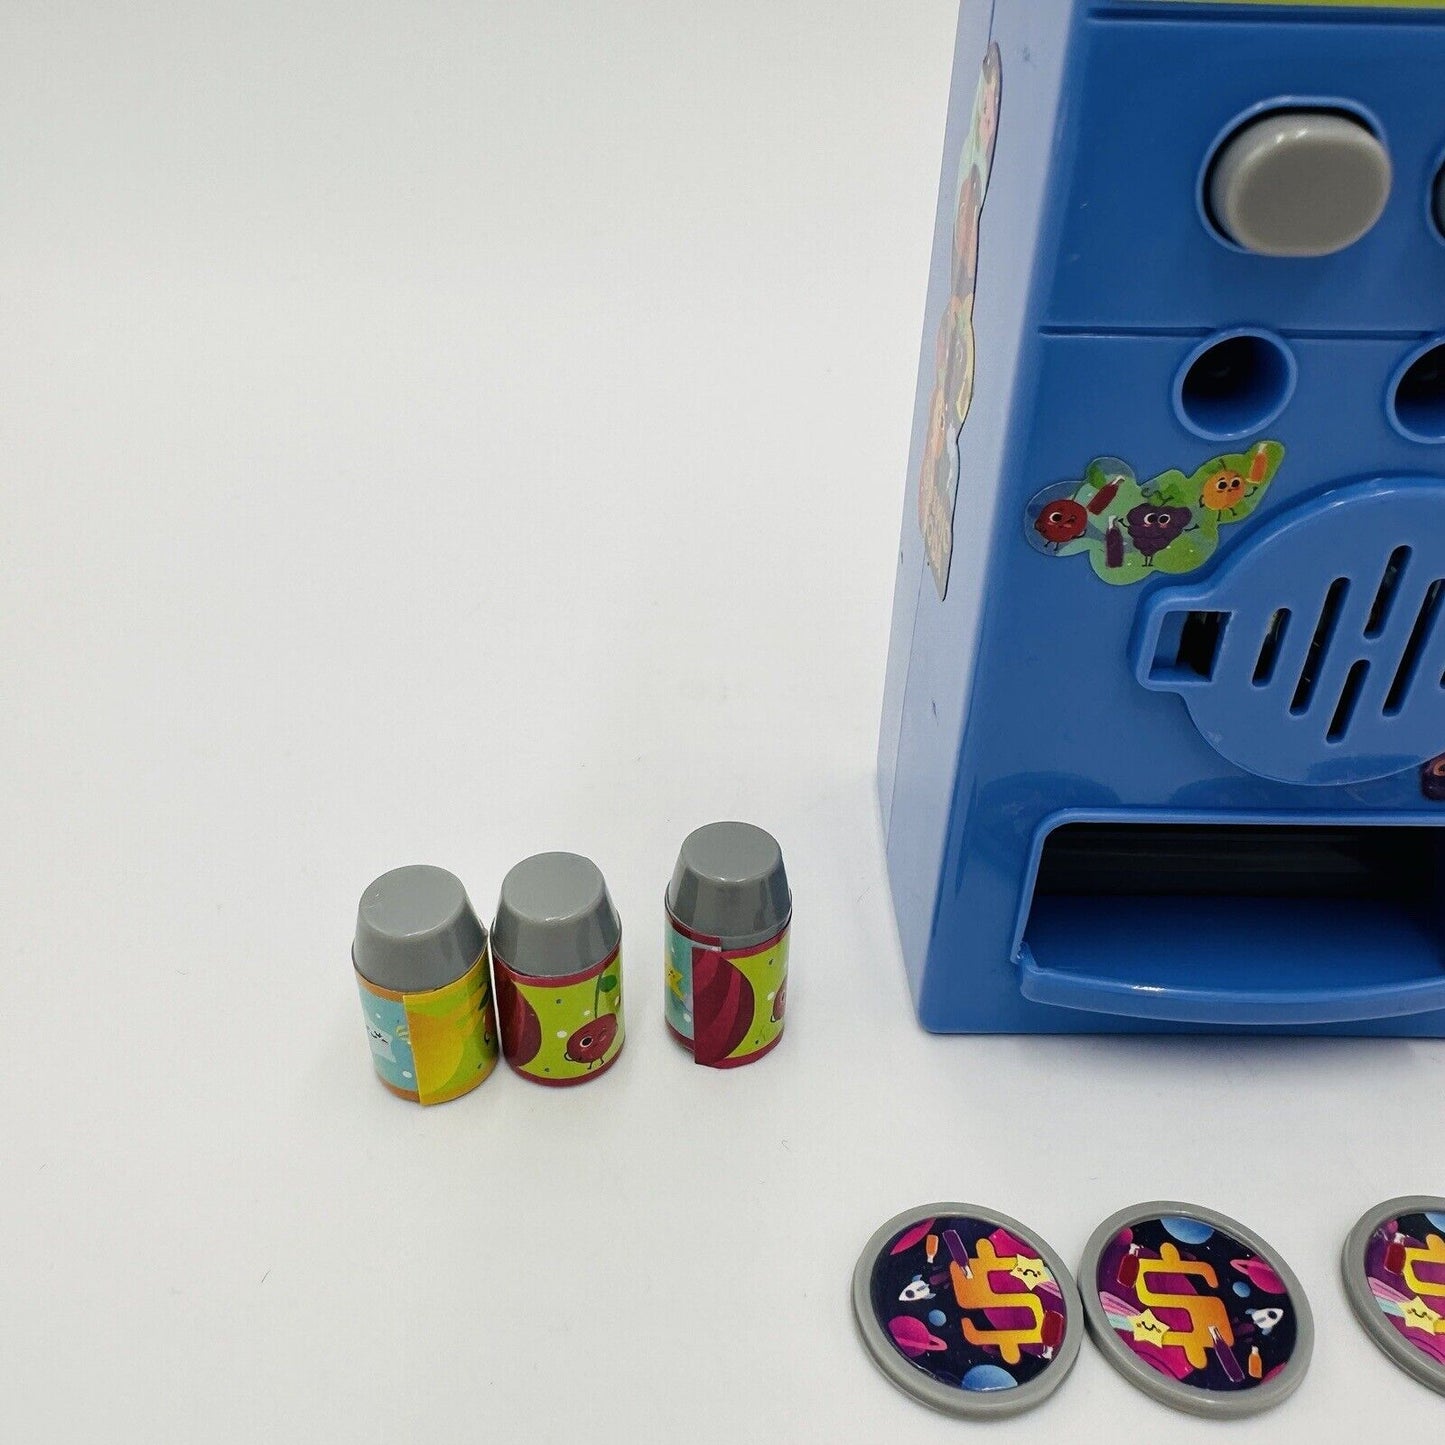 Cosmic Mini Soda Light Talking Vending Machine 8 Cans 4 Coin Rare Toy